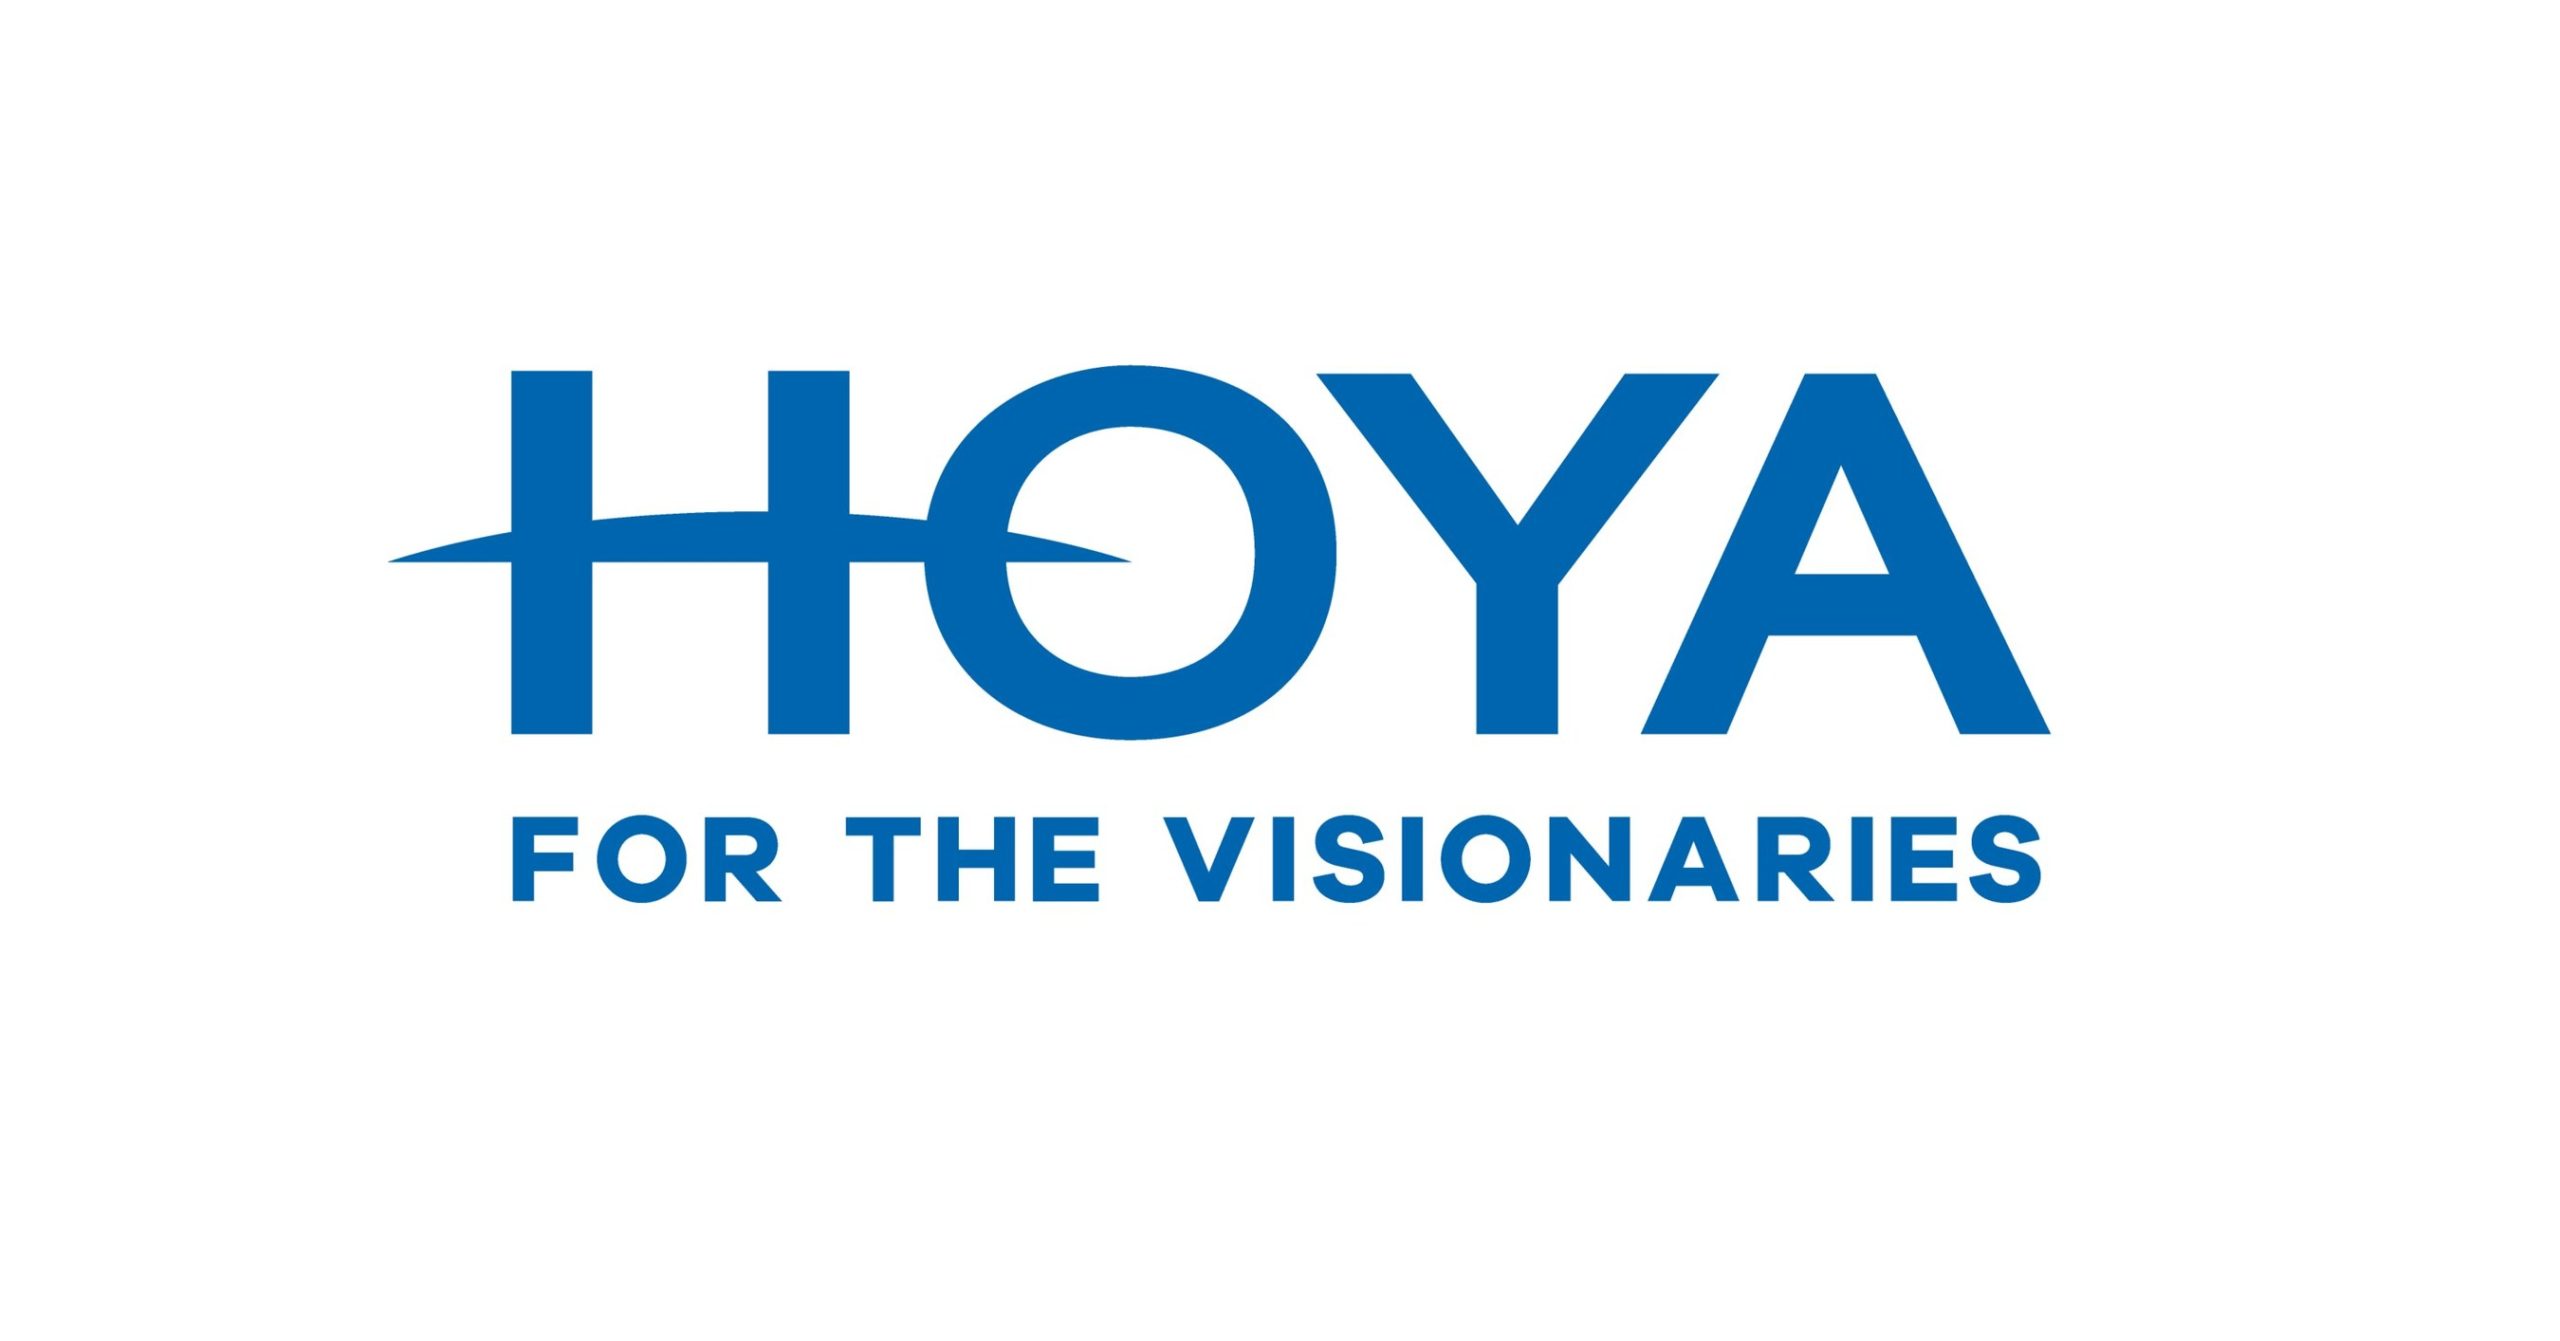 HOYA Vision Care, North America